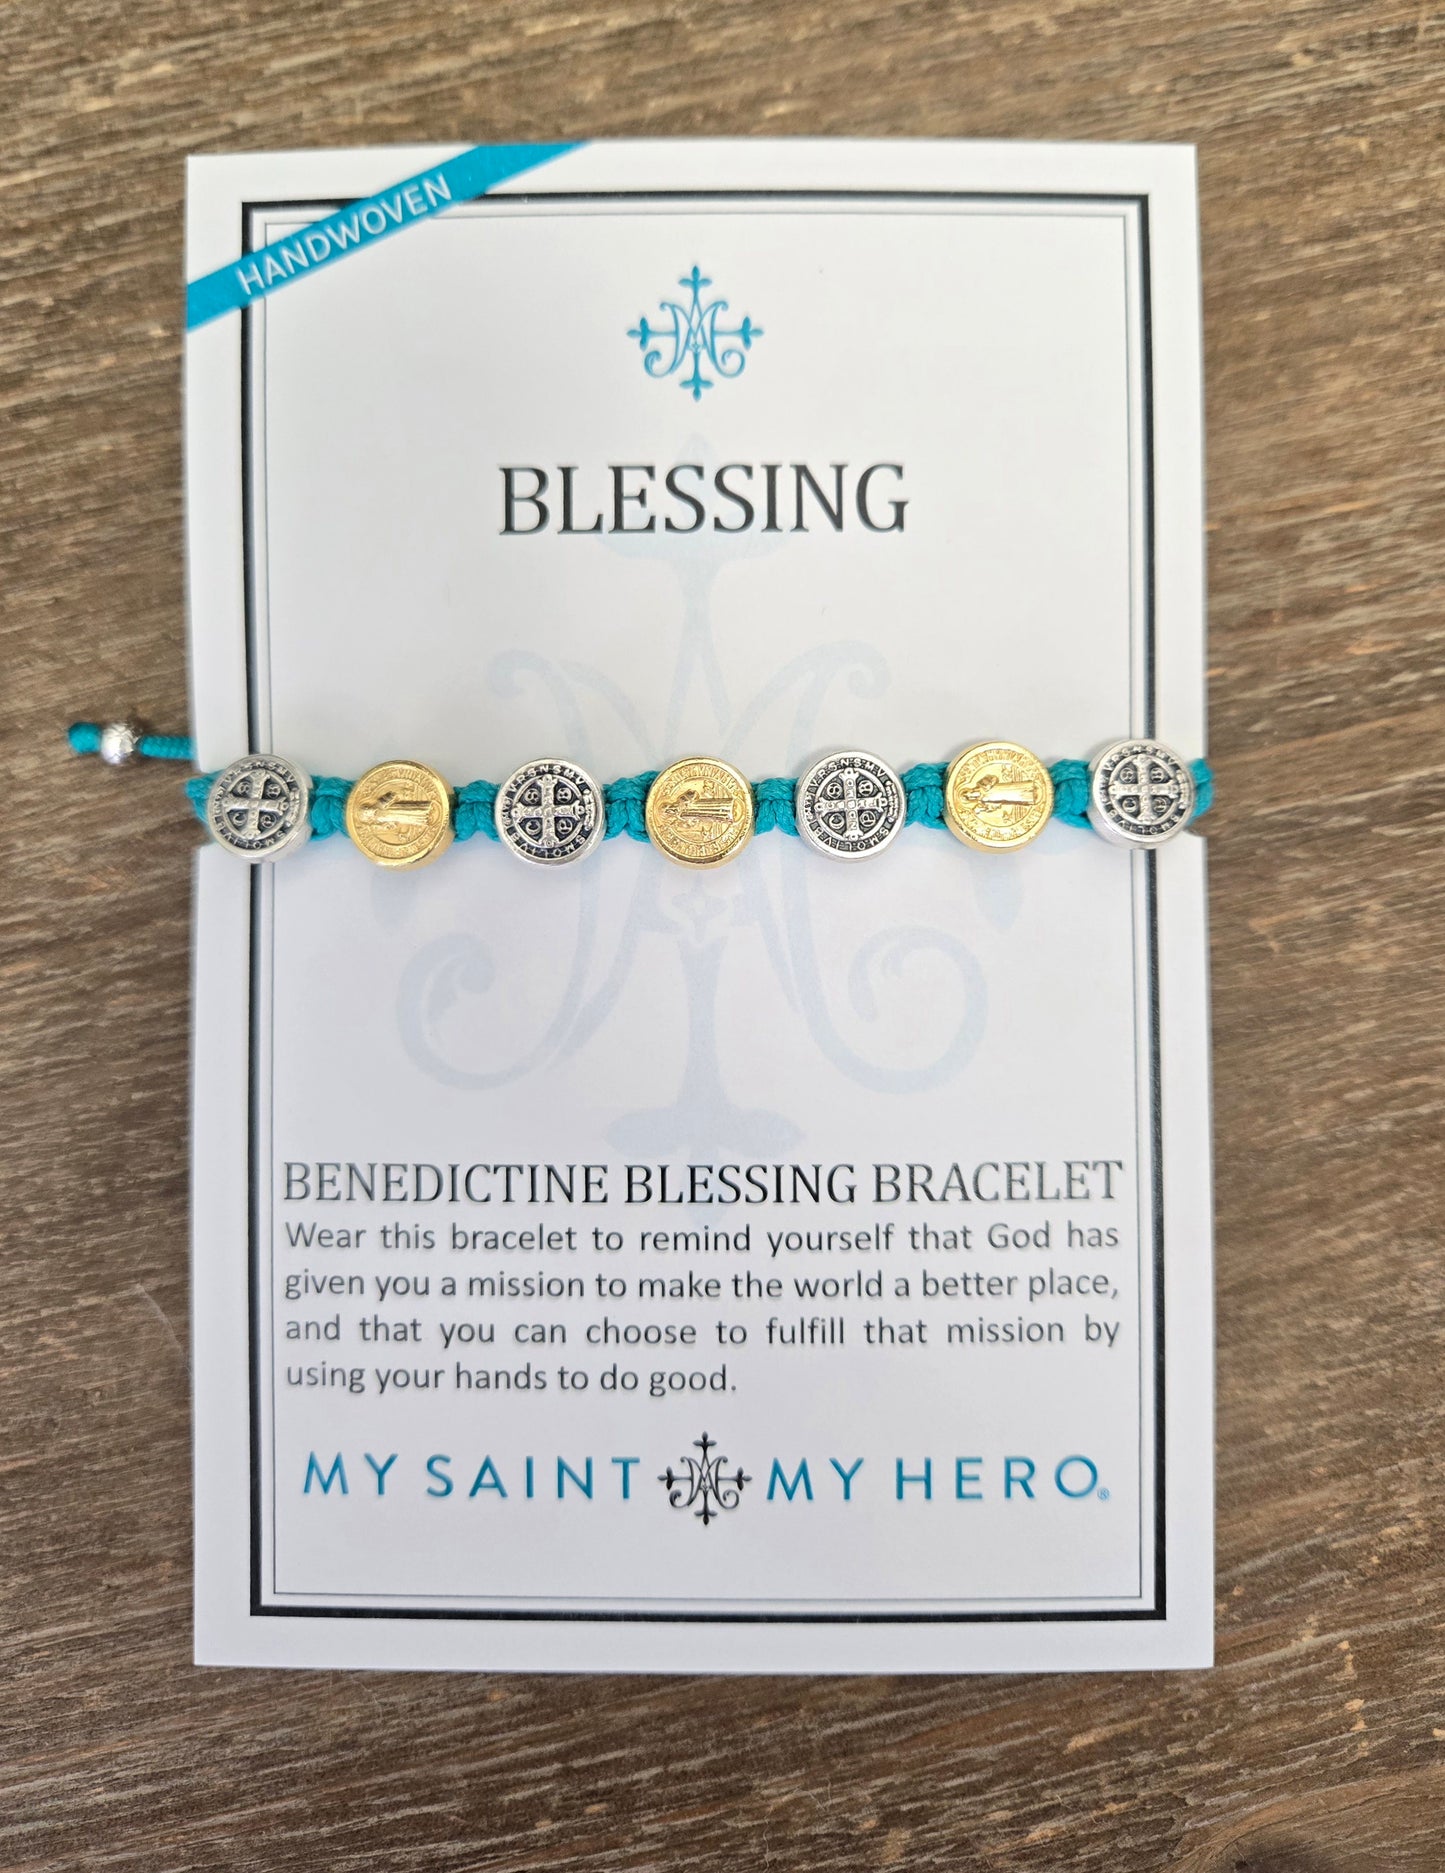 Benedictine blessing bracelet- mixed medals